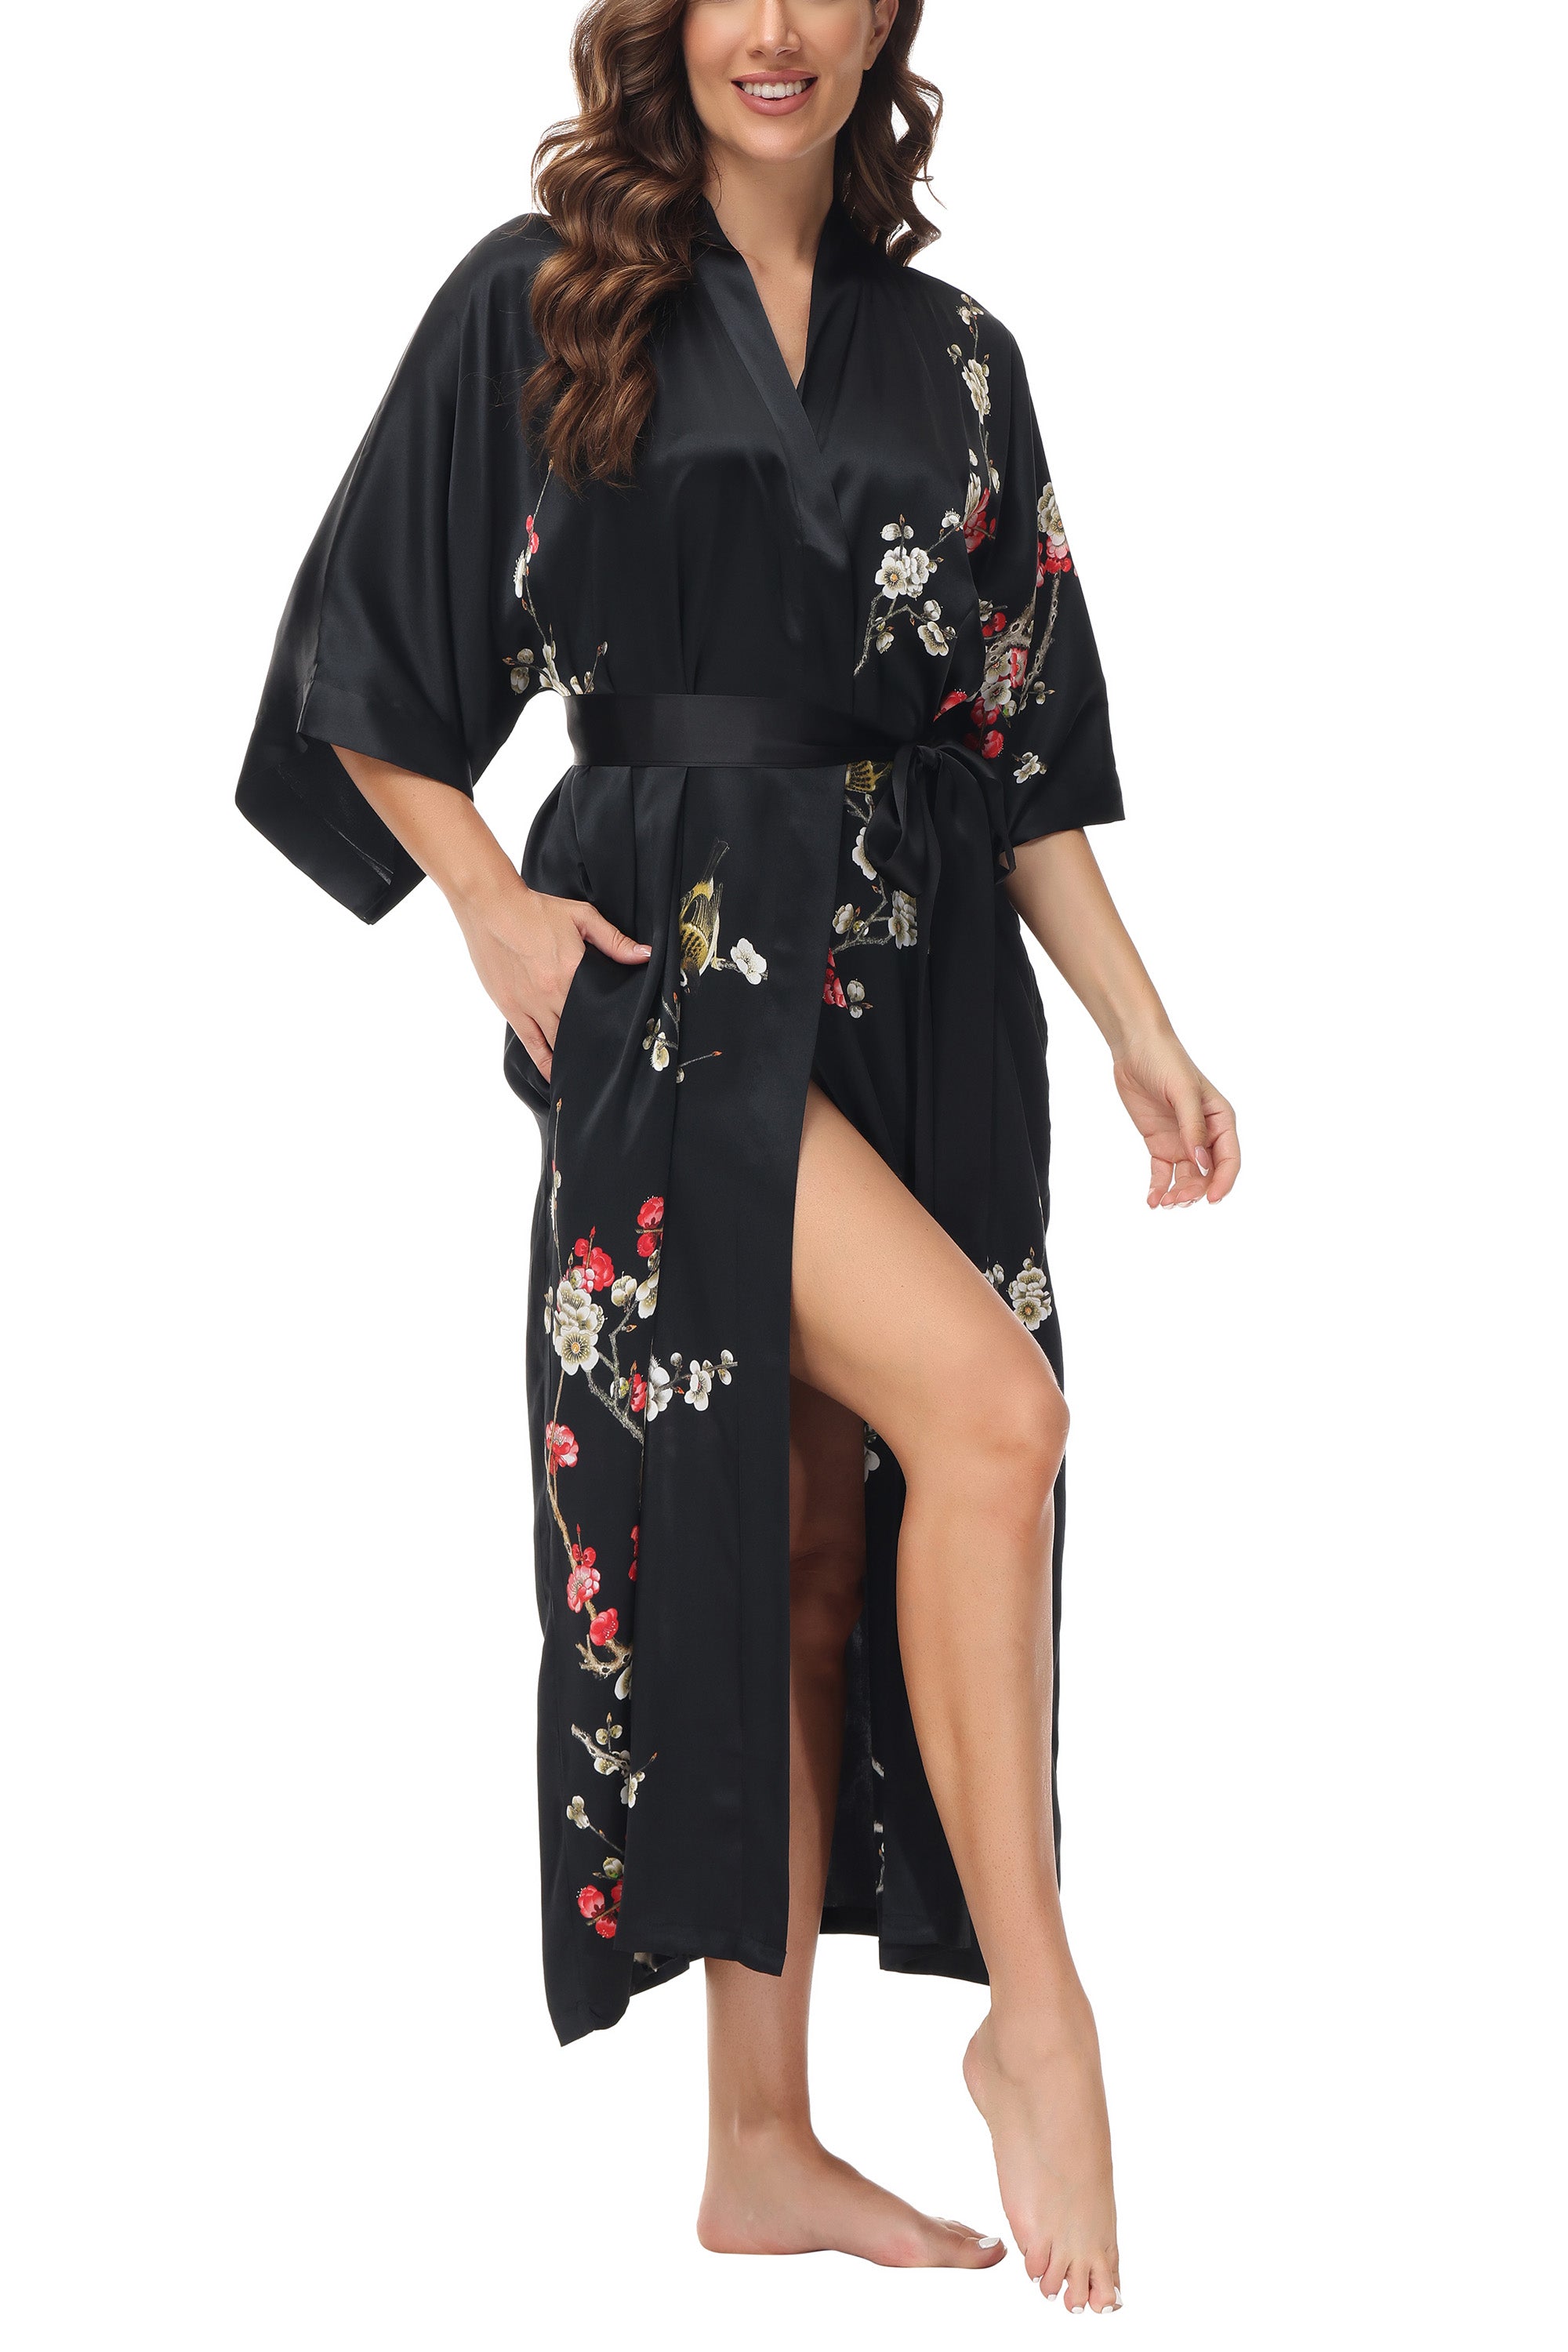 OSCAR ROSSA Women's Silk Sleepwear 100% Silk Charmeuse Long Robe